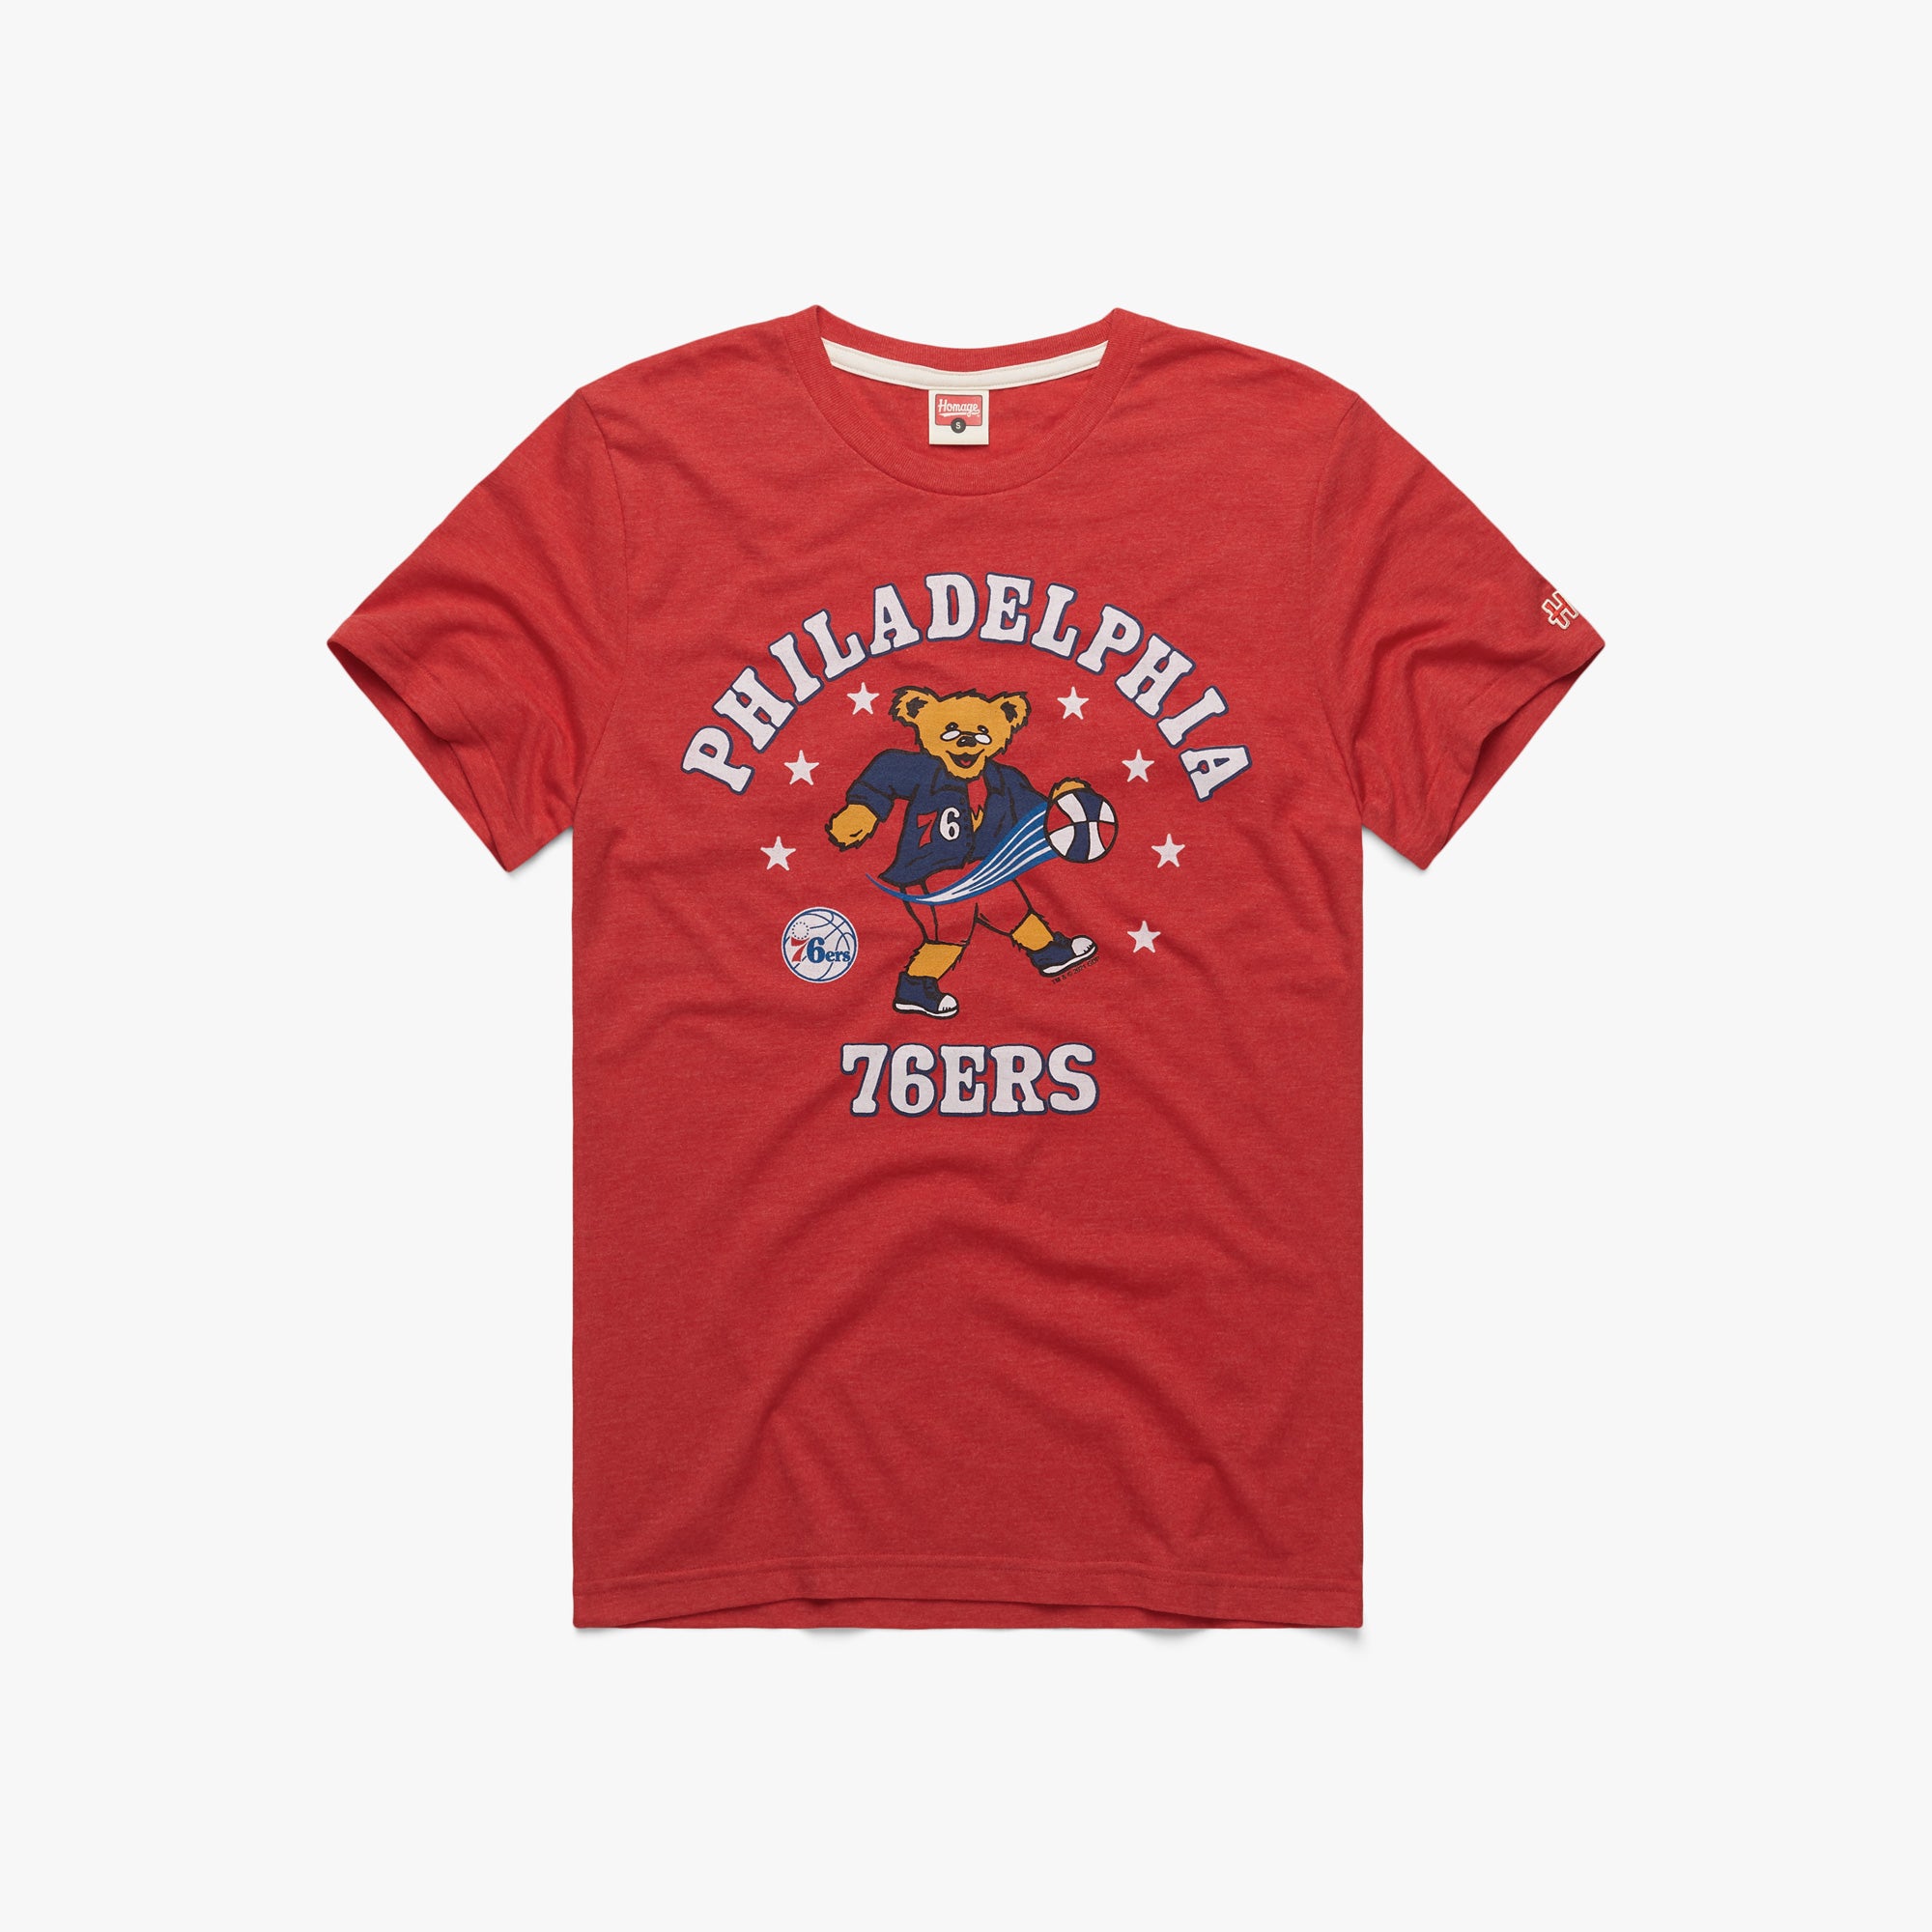 76ers pride shirt